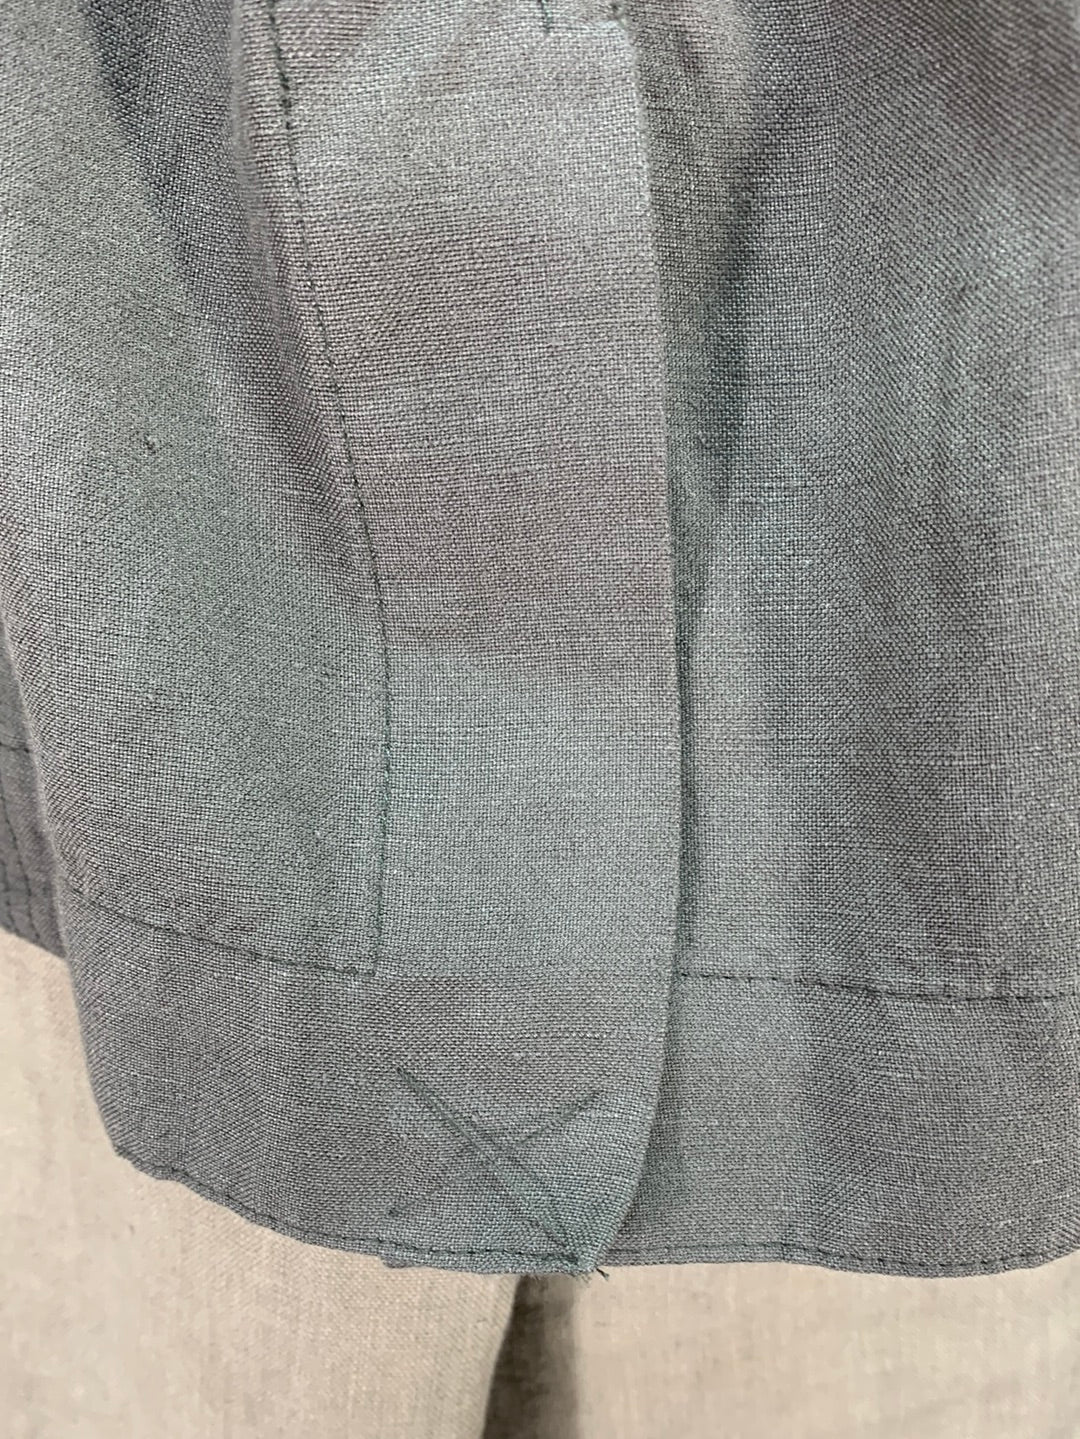 NWT - J JILL green Linen Rayon Blend Belted Caraway Jacket - MP